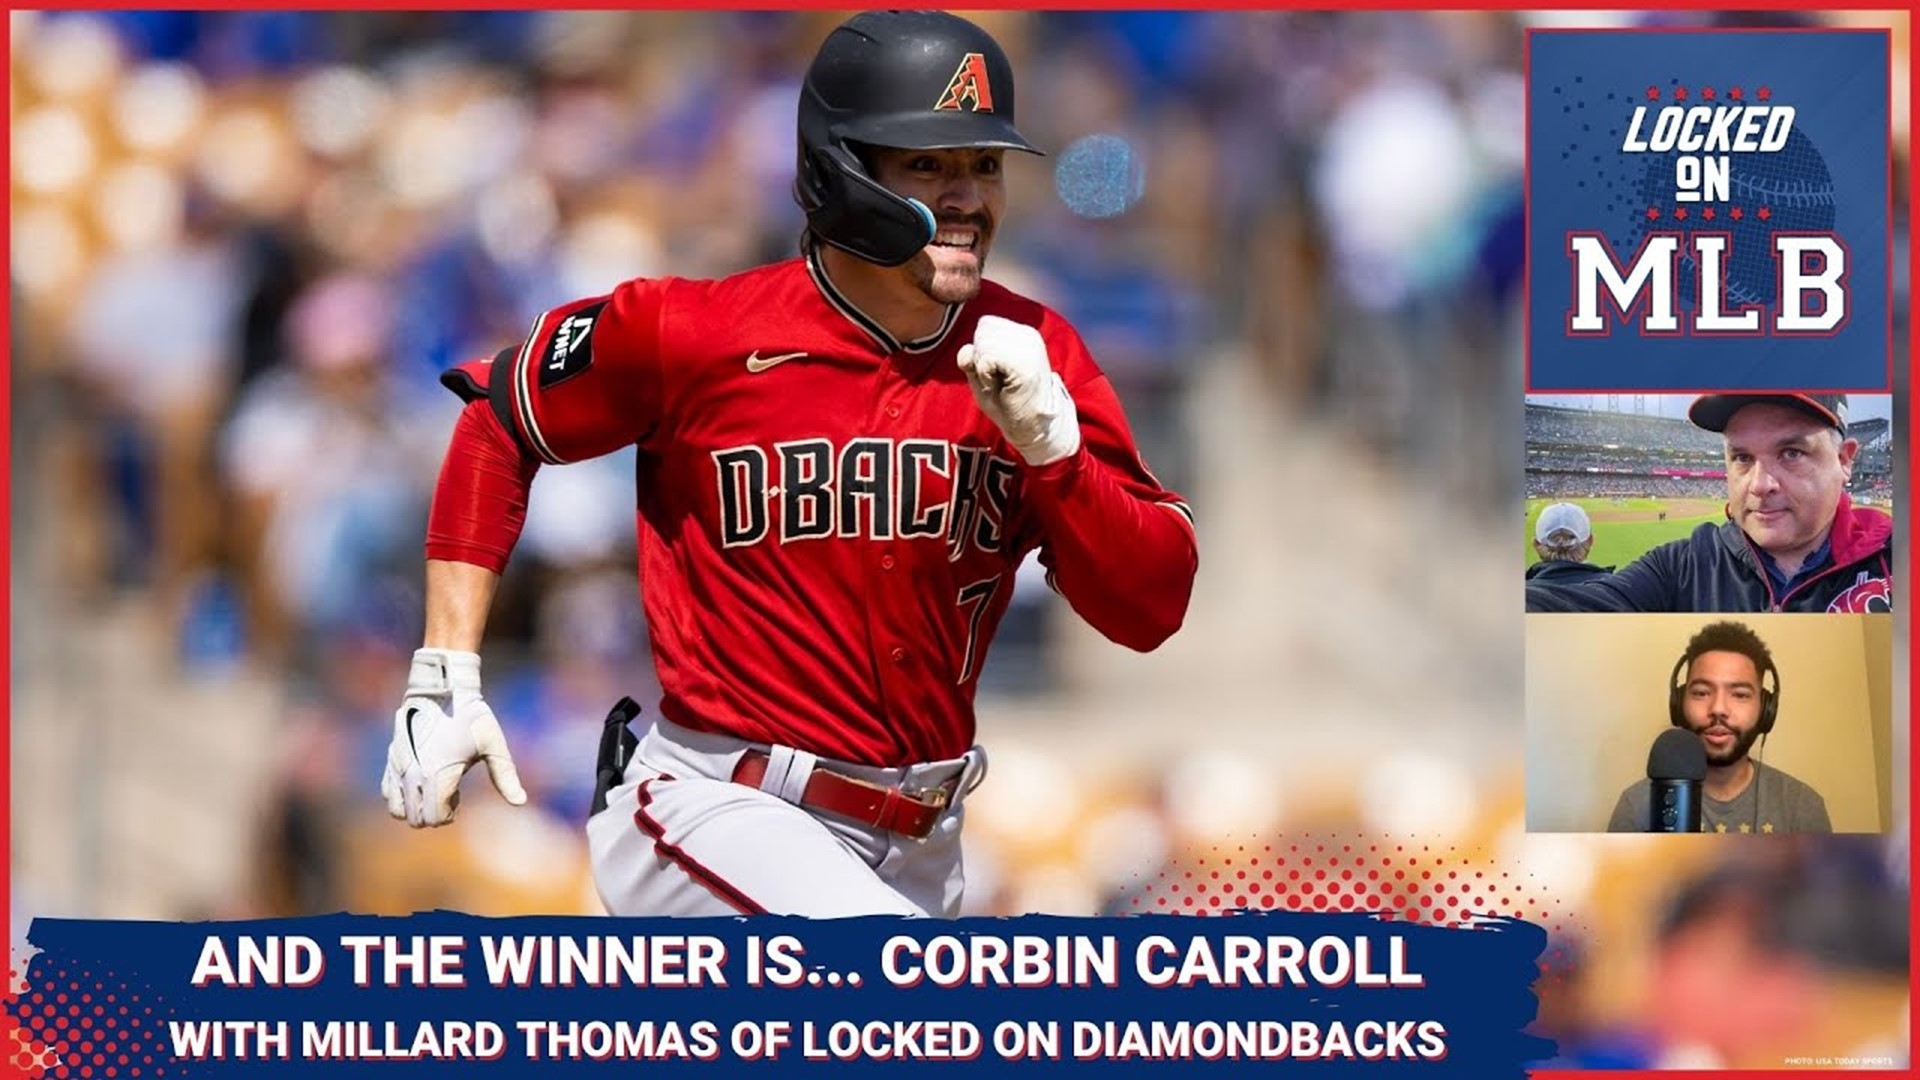 Locked on MLB - And the Winner Is... Corbin Carroll